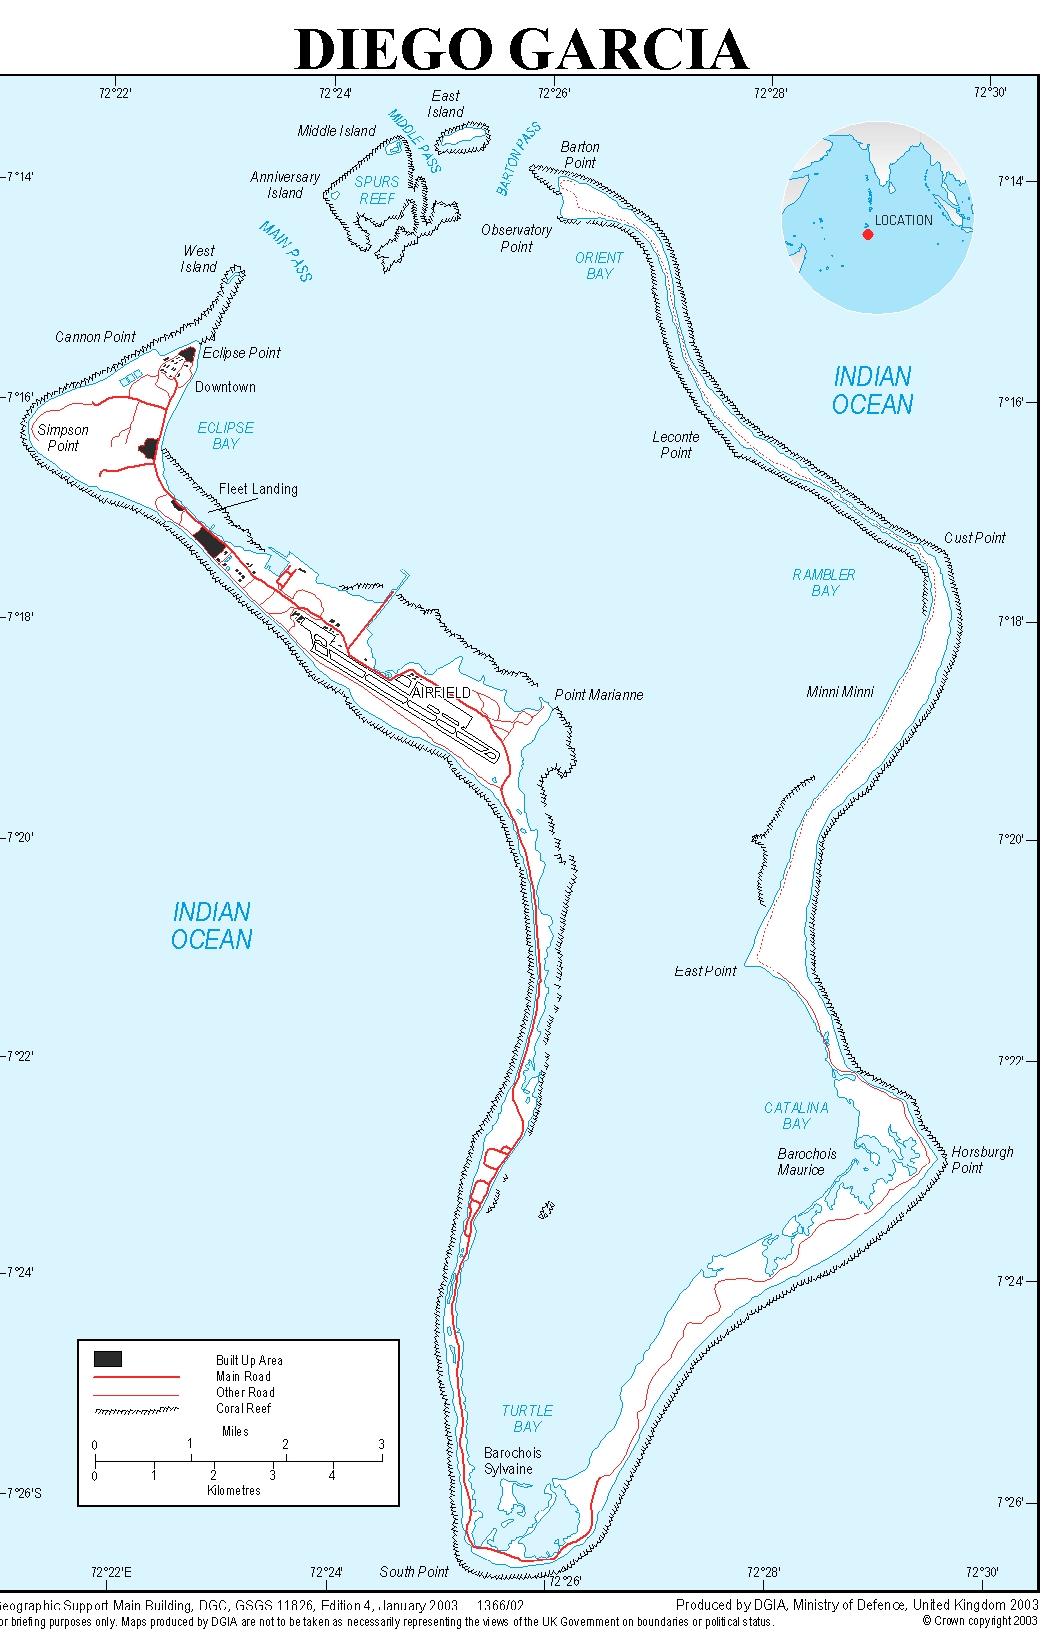 British Ministry of Defense
            Map of Diego Garcia, 2003